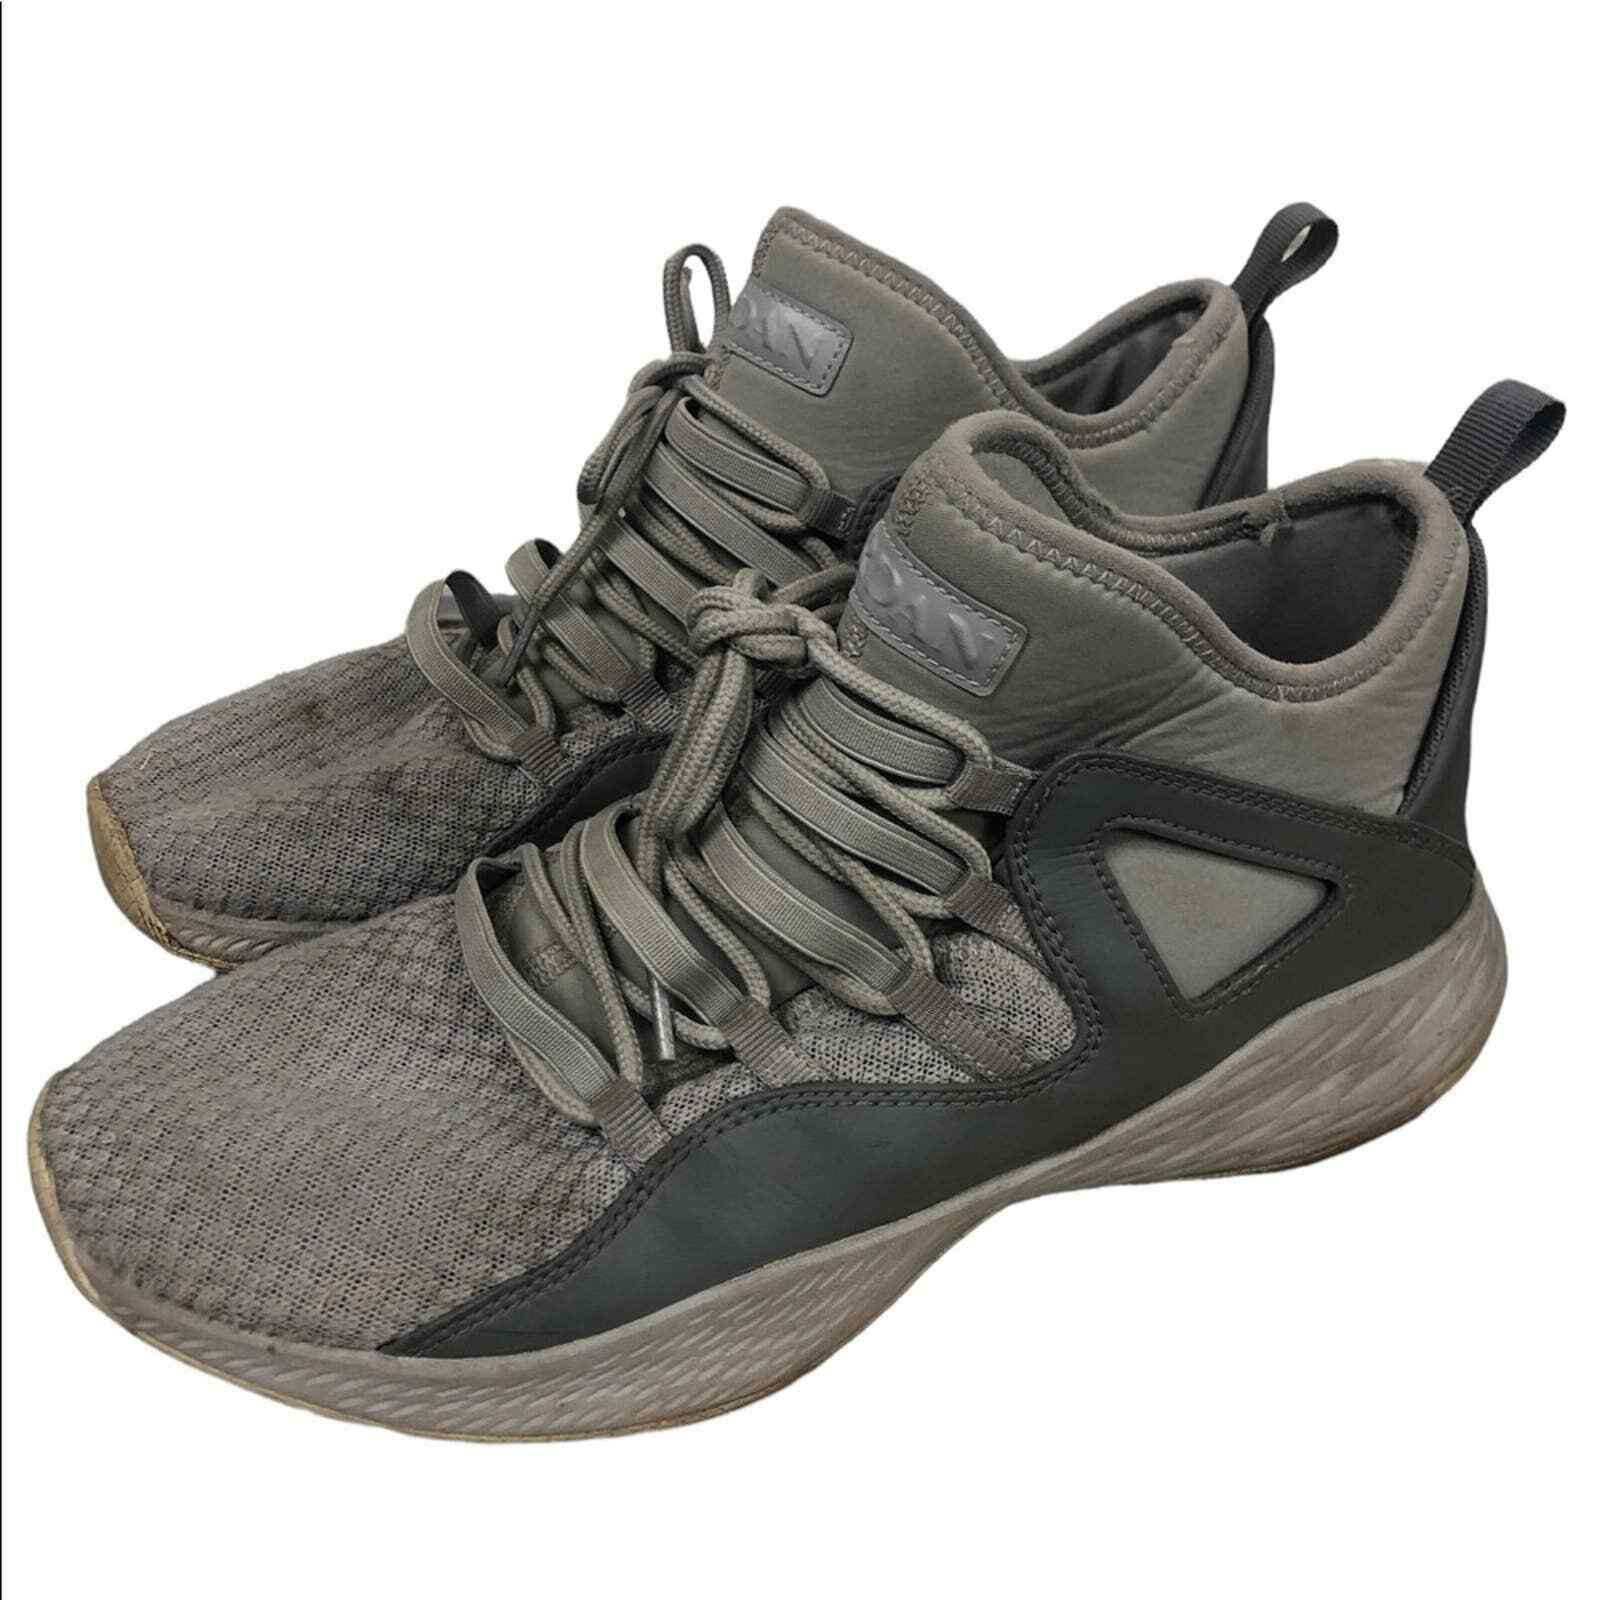 Primary image for Jordan Formula 23 Gray 2017 size 9 mens sneakers